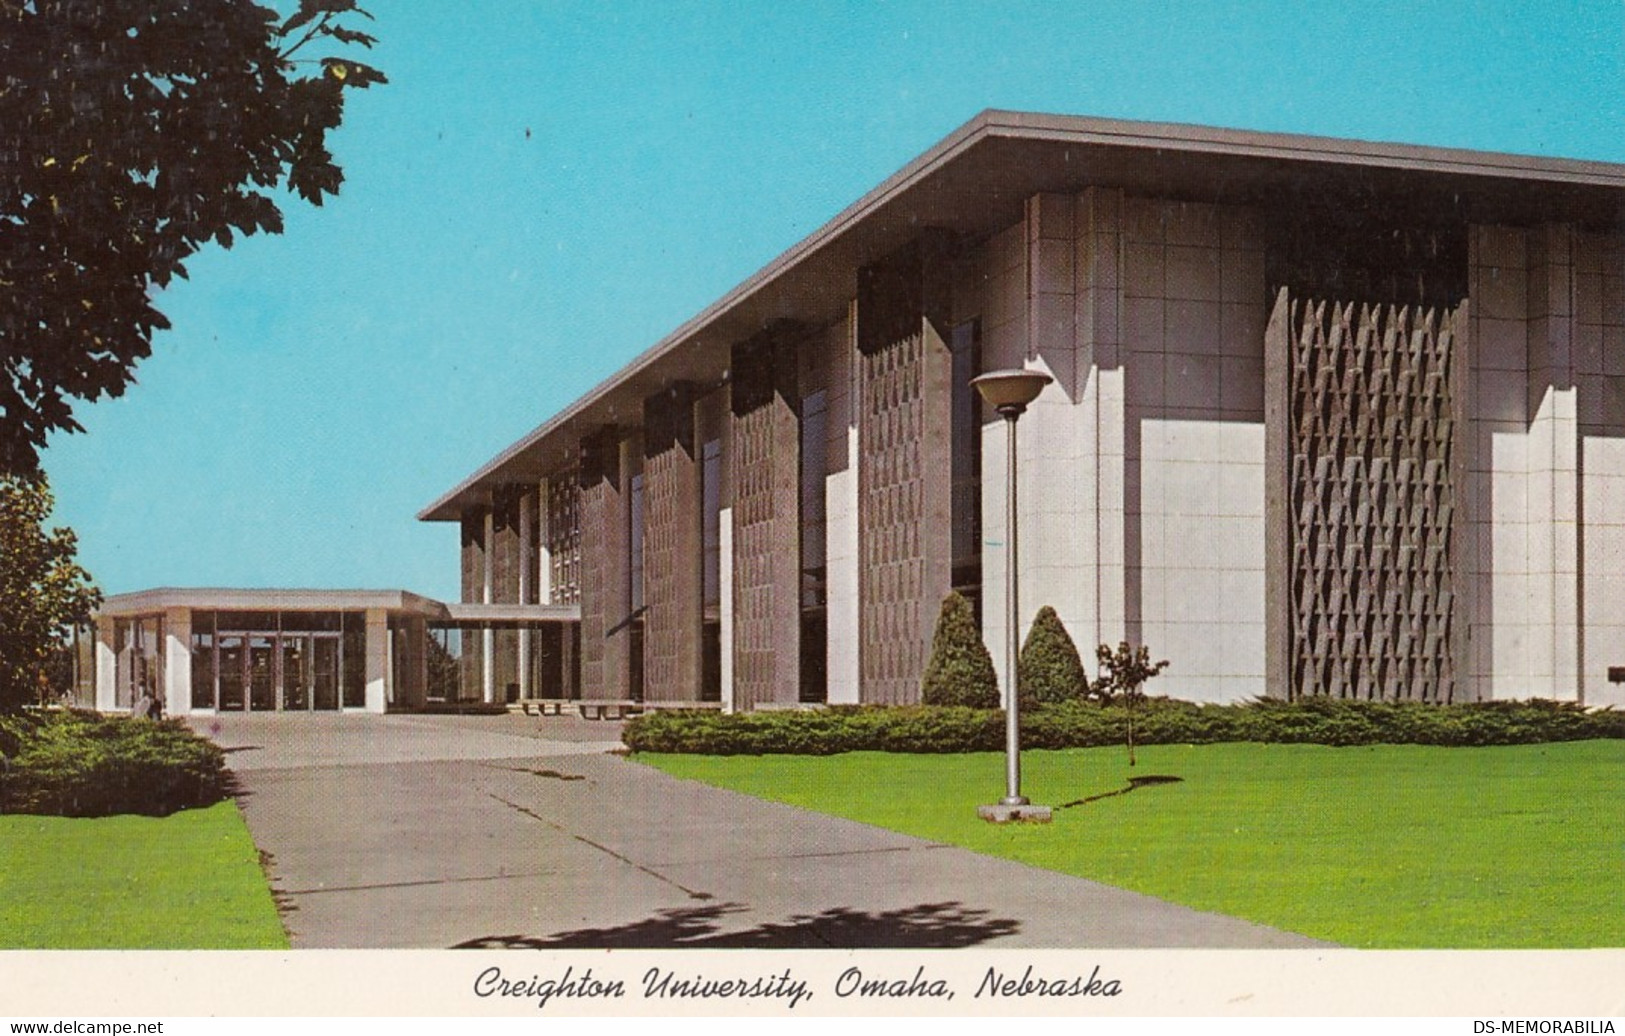 Library - The Alumini Memorial Library , Creighton University In Omaha Nebraska US - Libraries